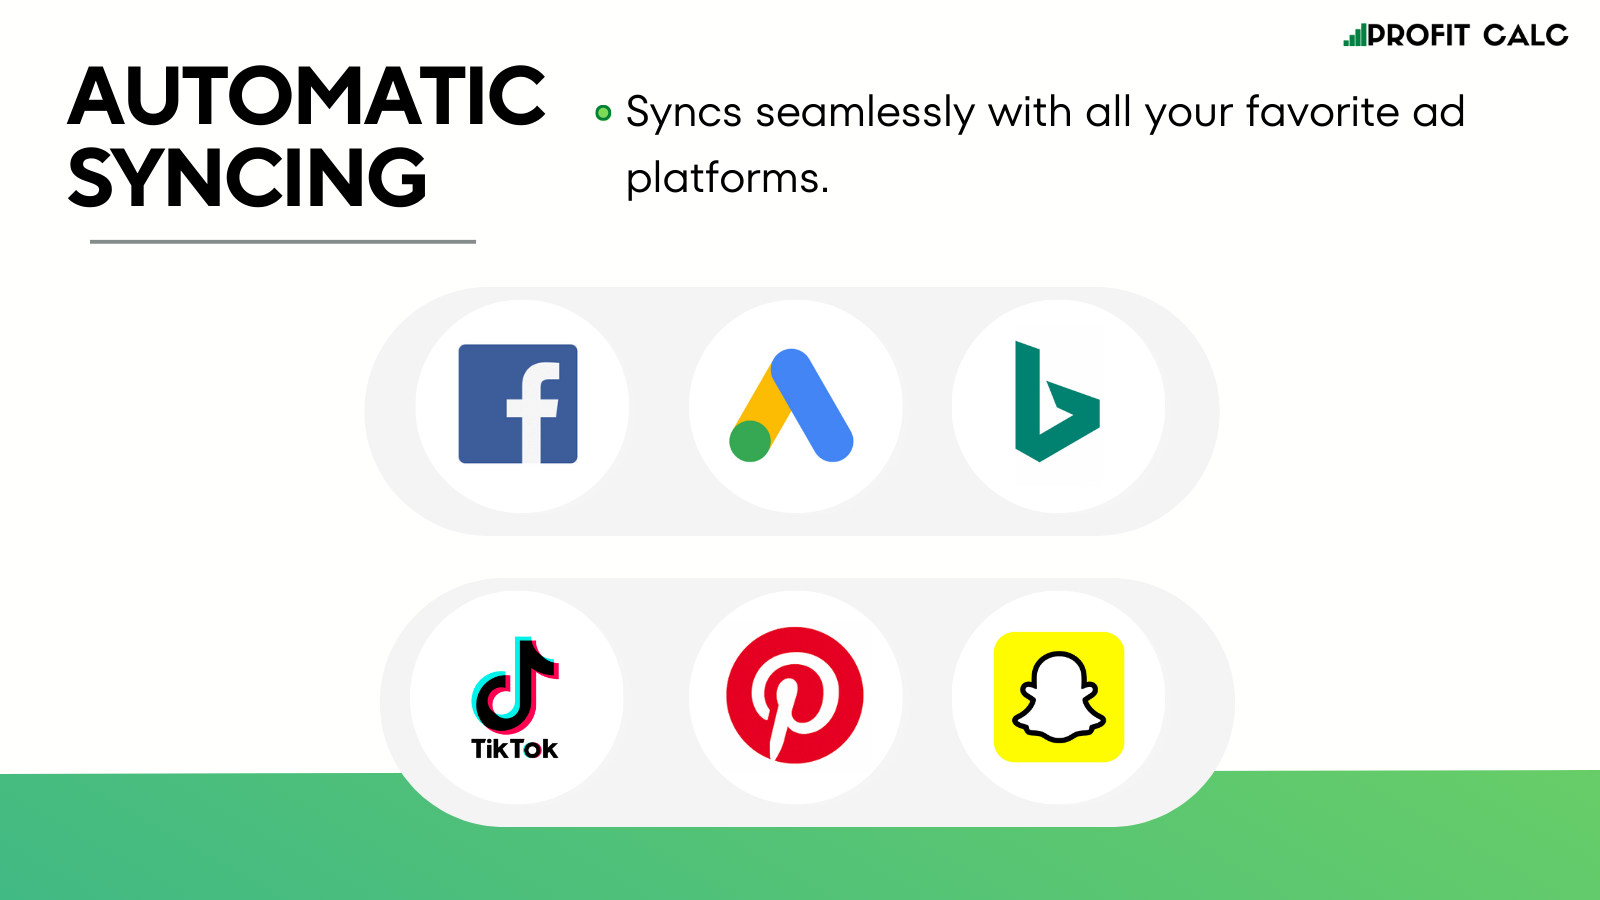 Sincronização com Facebook, Google, Bing, Tik Tok, Snapchat, & Pinterest